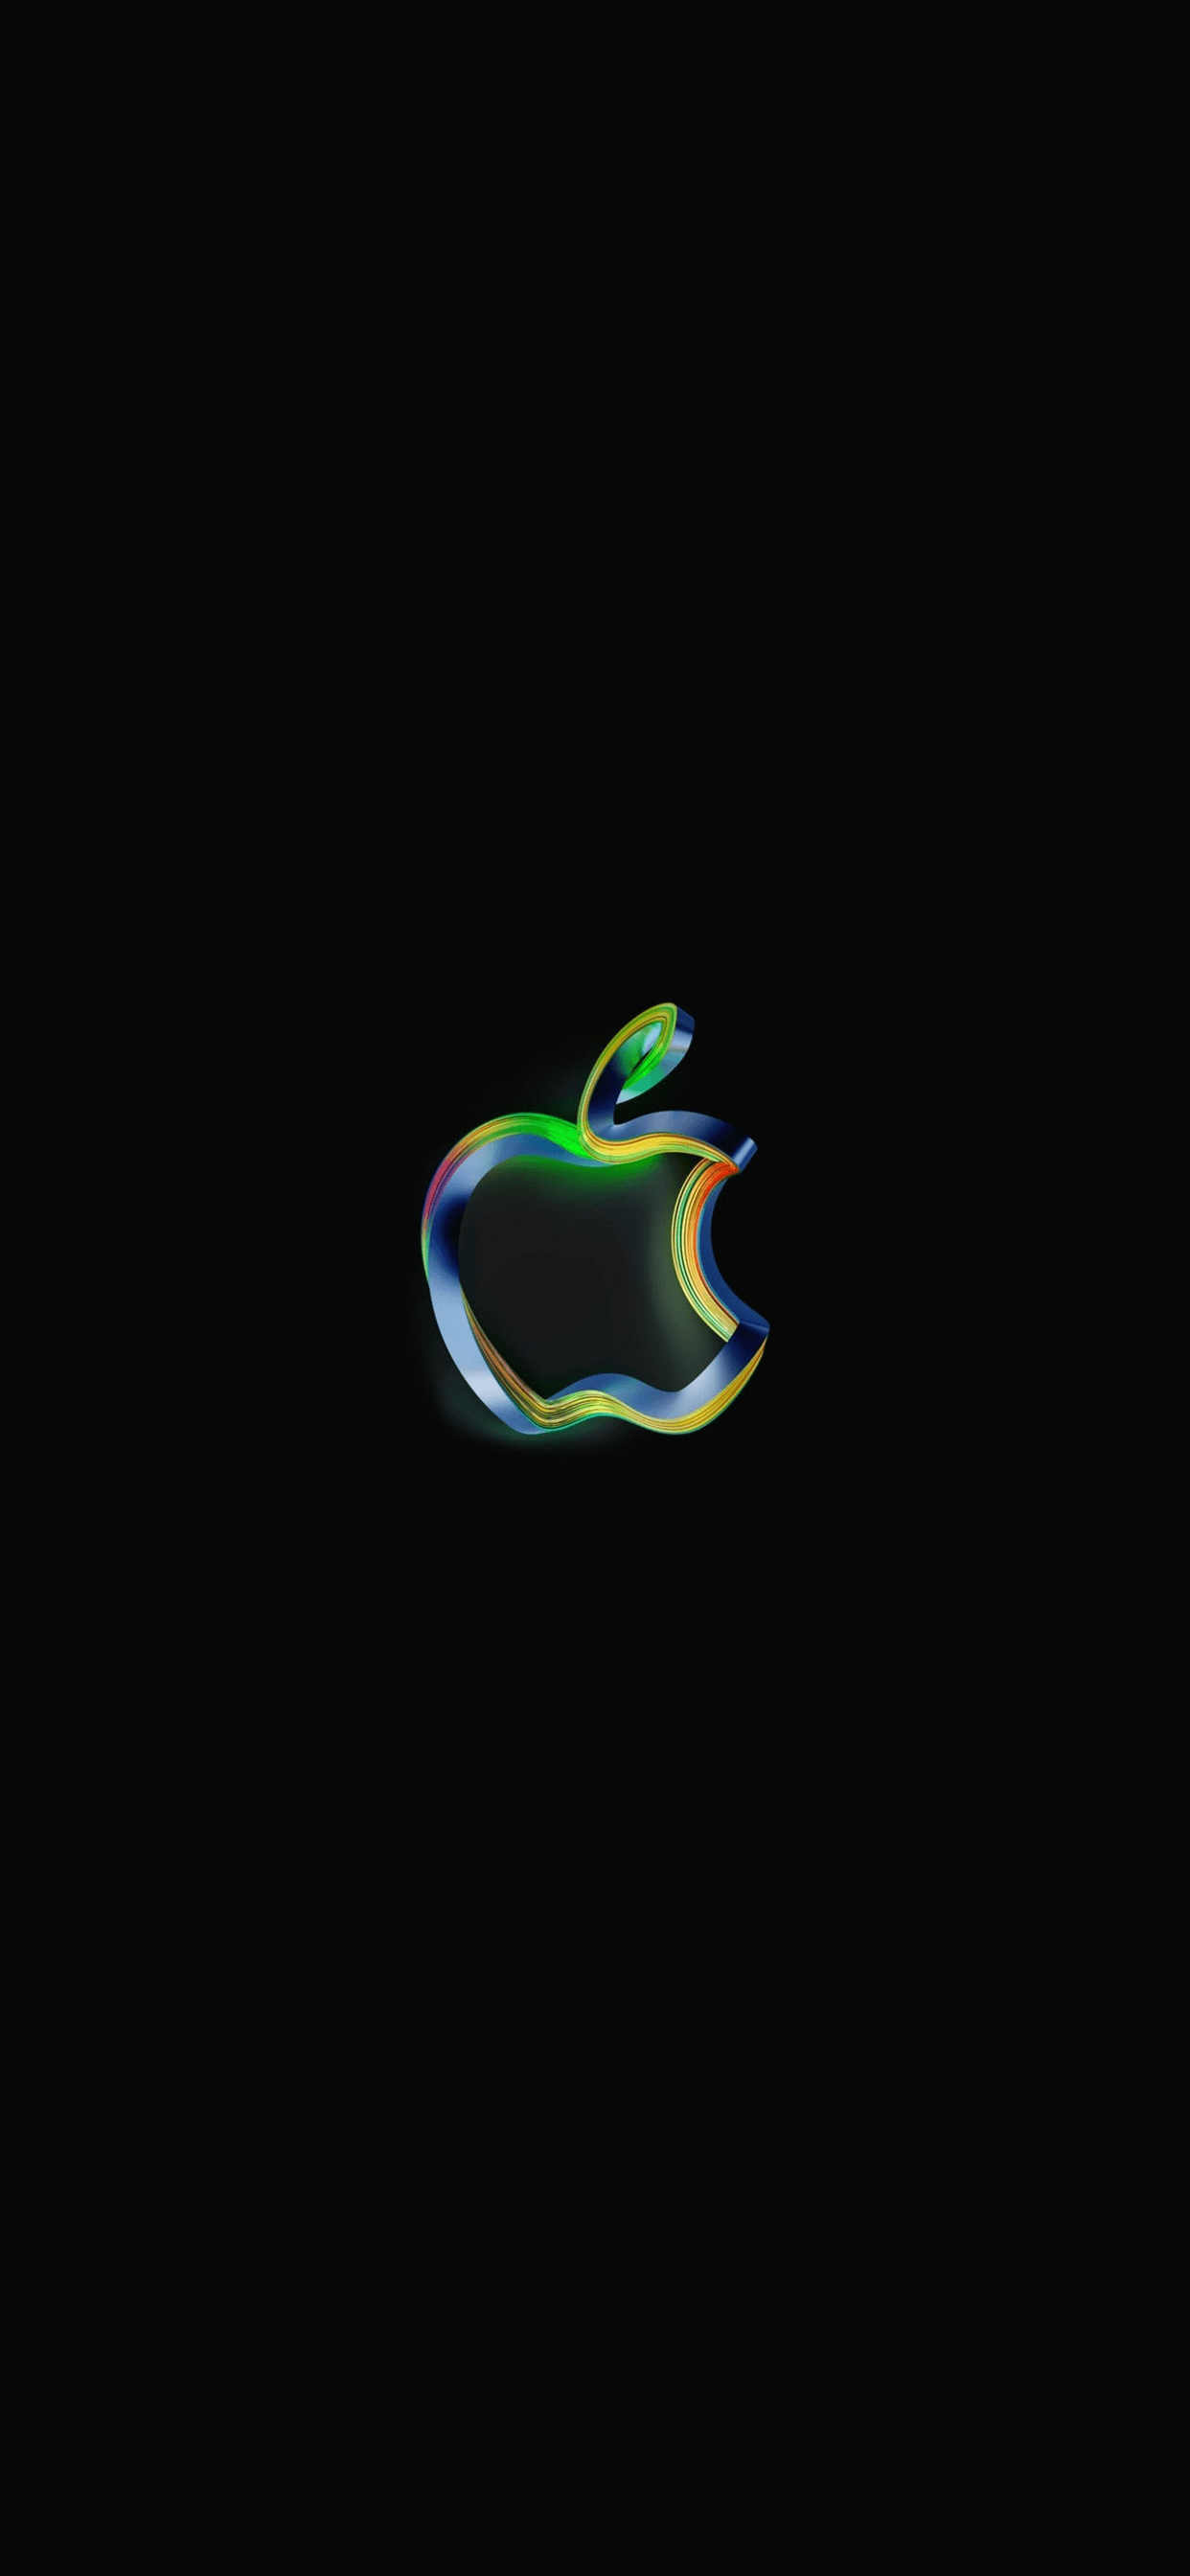 Apple Plus Logo - Apple logo Wallpaper for iPhone X, 6